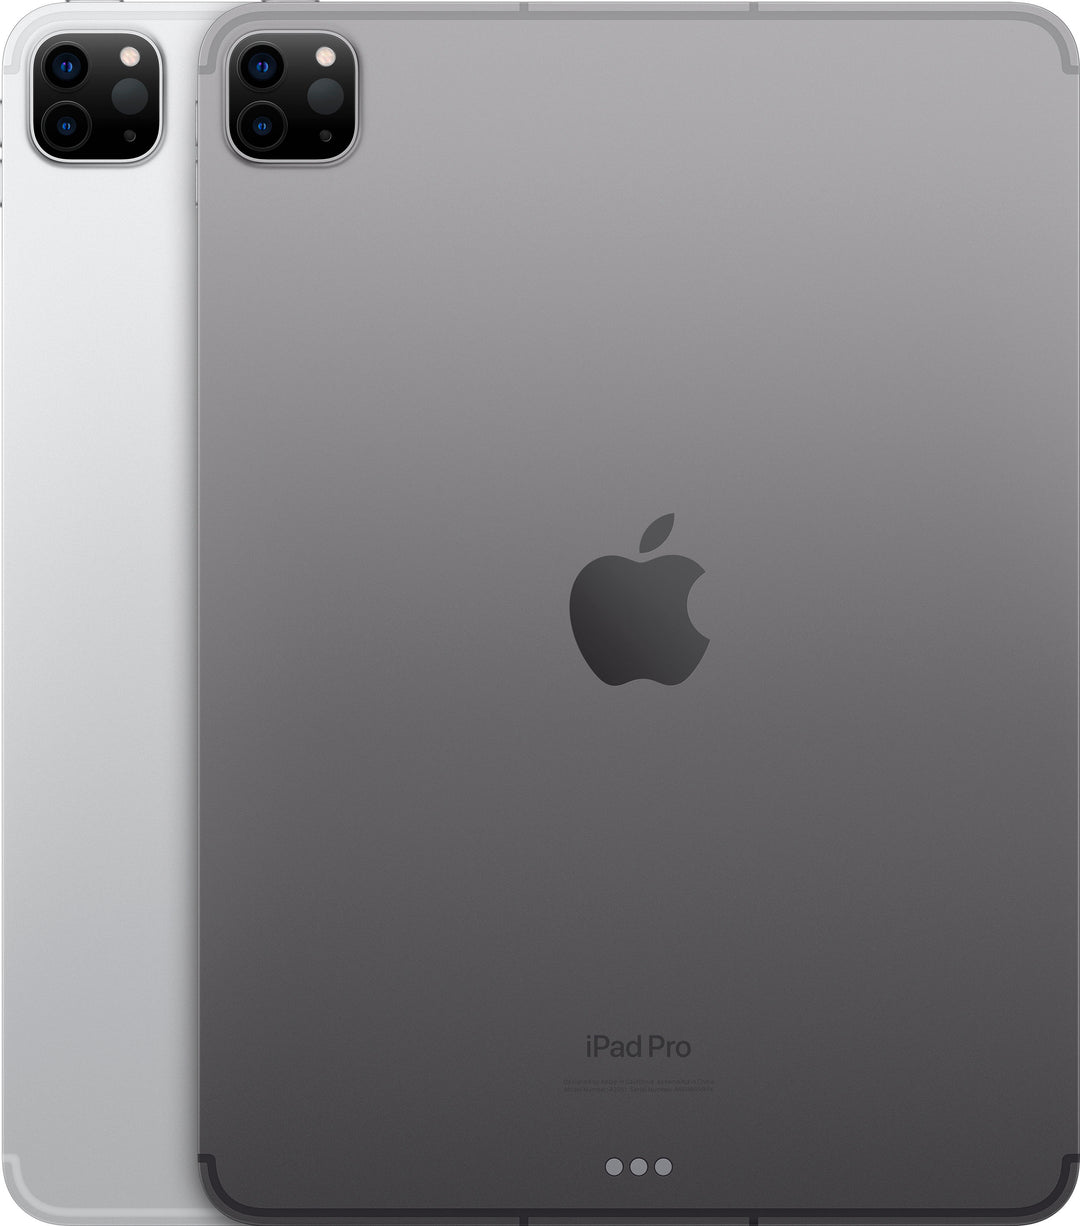 Apple - 11-Inch iPad Pro (Latest Model) with Wi-Fi + Cellular - 256GB - Space Gray (Verizon)_4